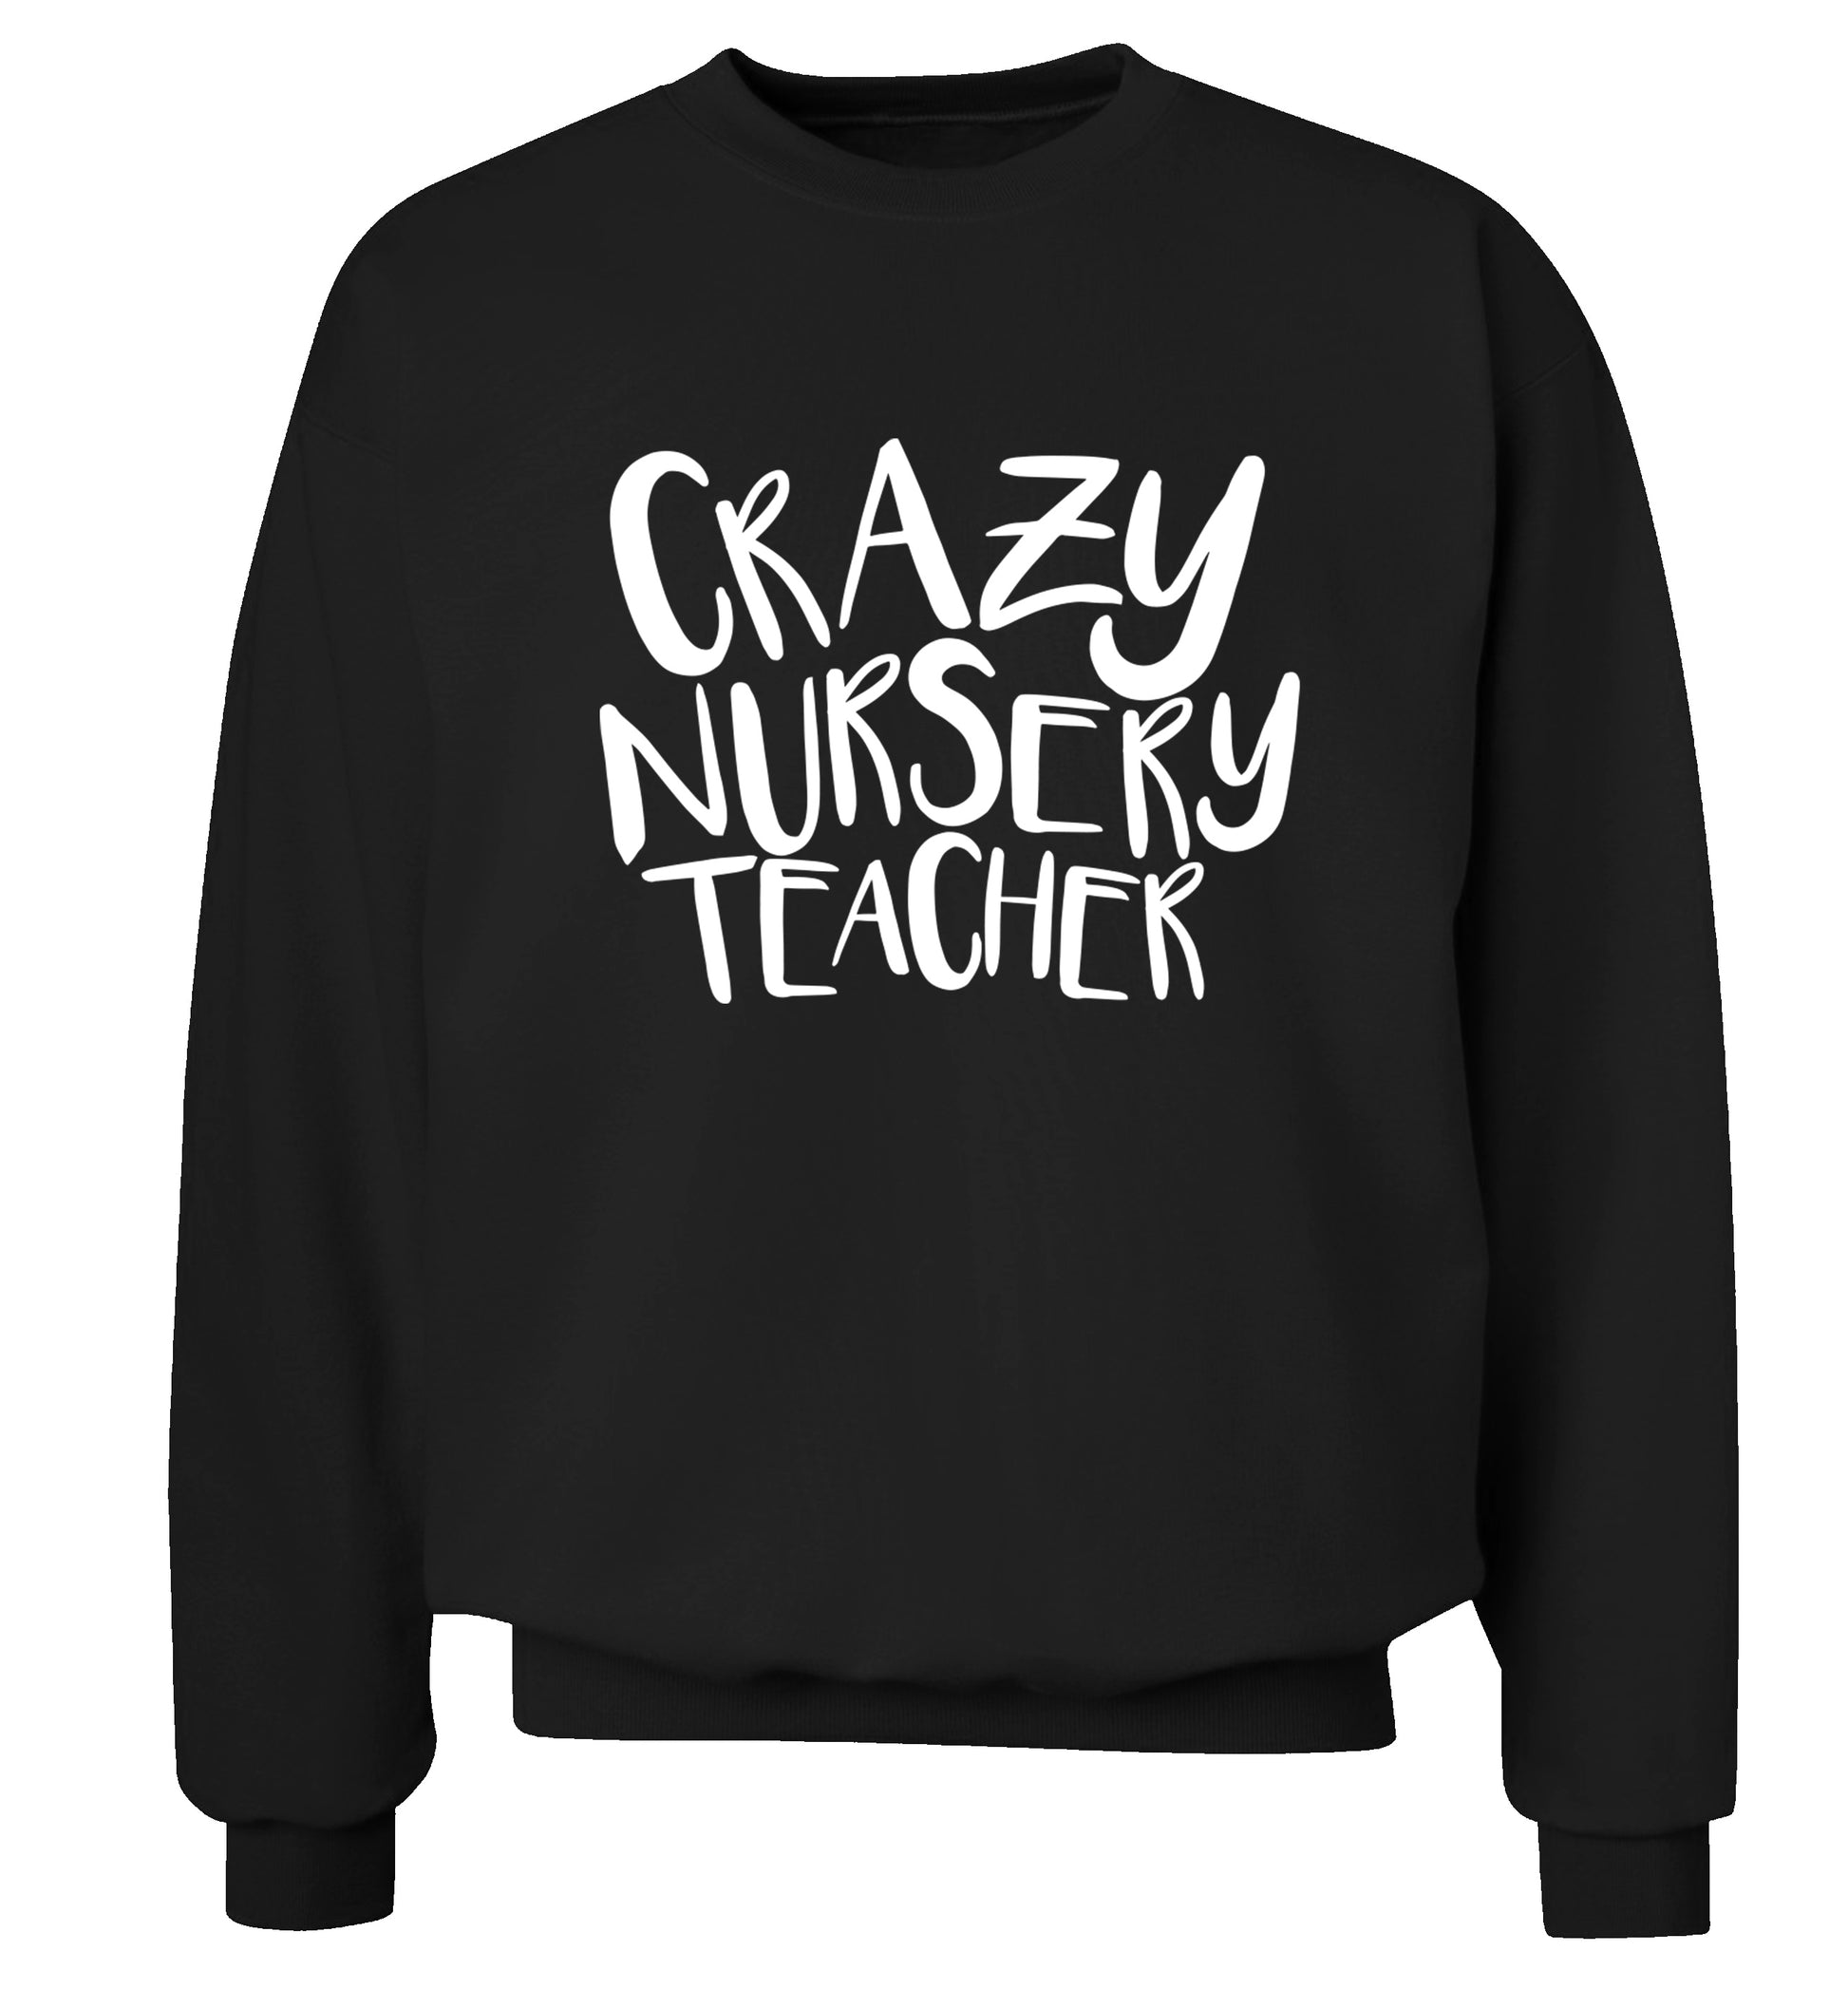 Crazy nursery teacher Adult's unisex black Sweater 2XL